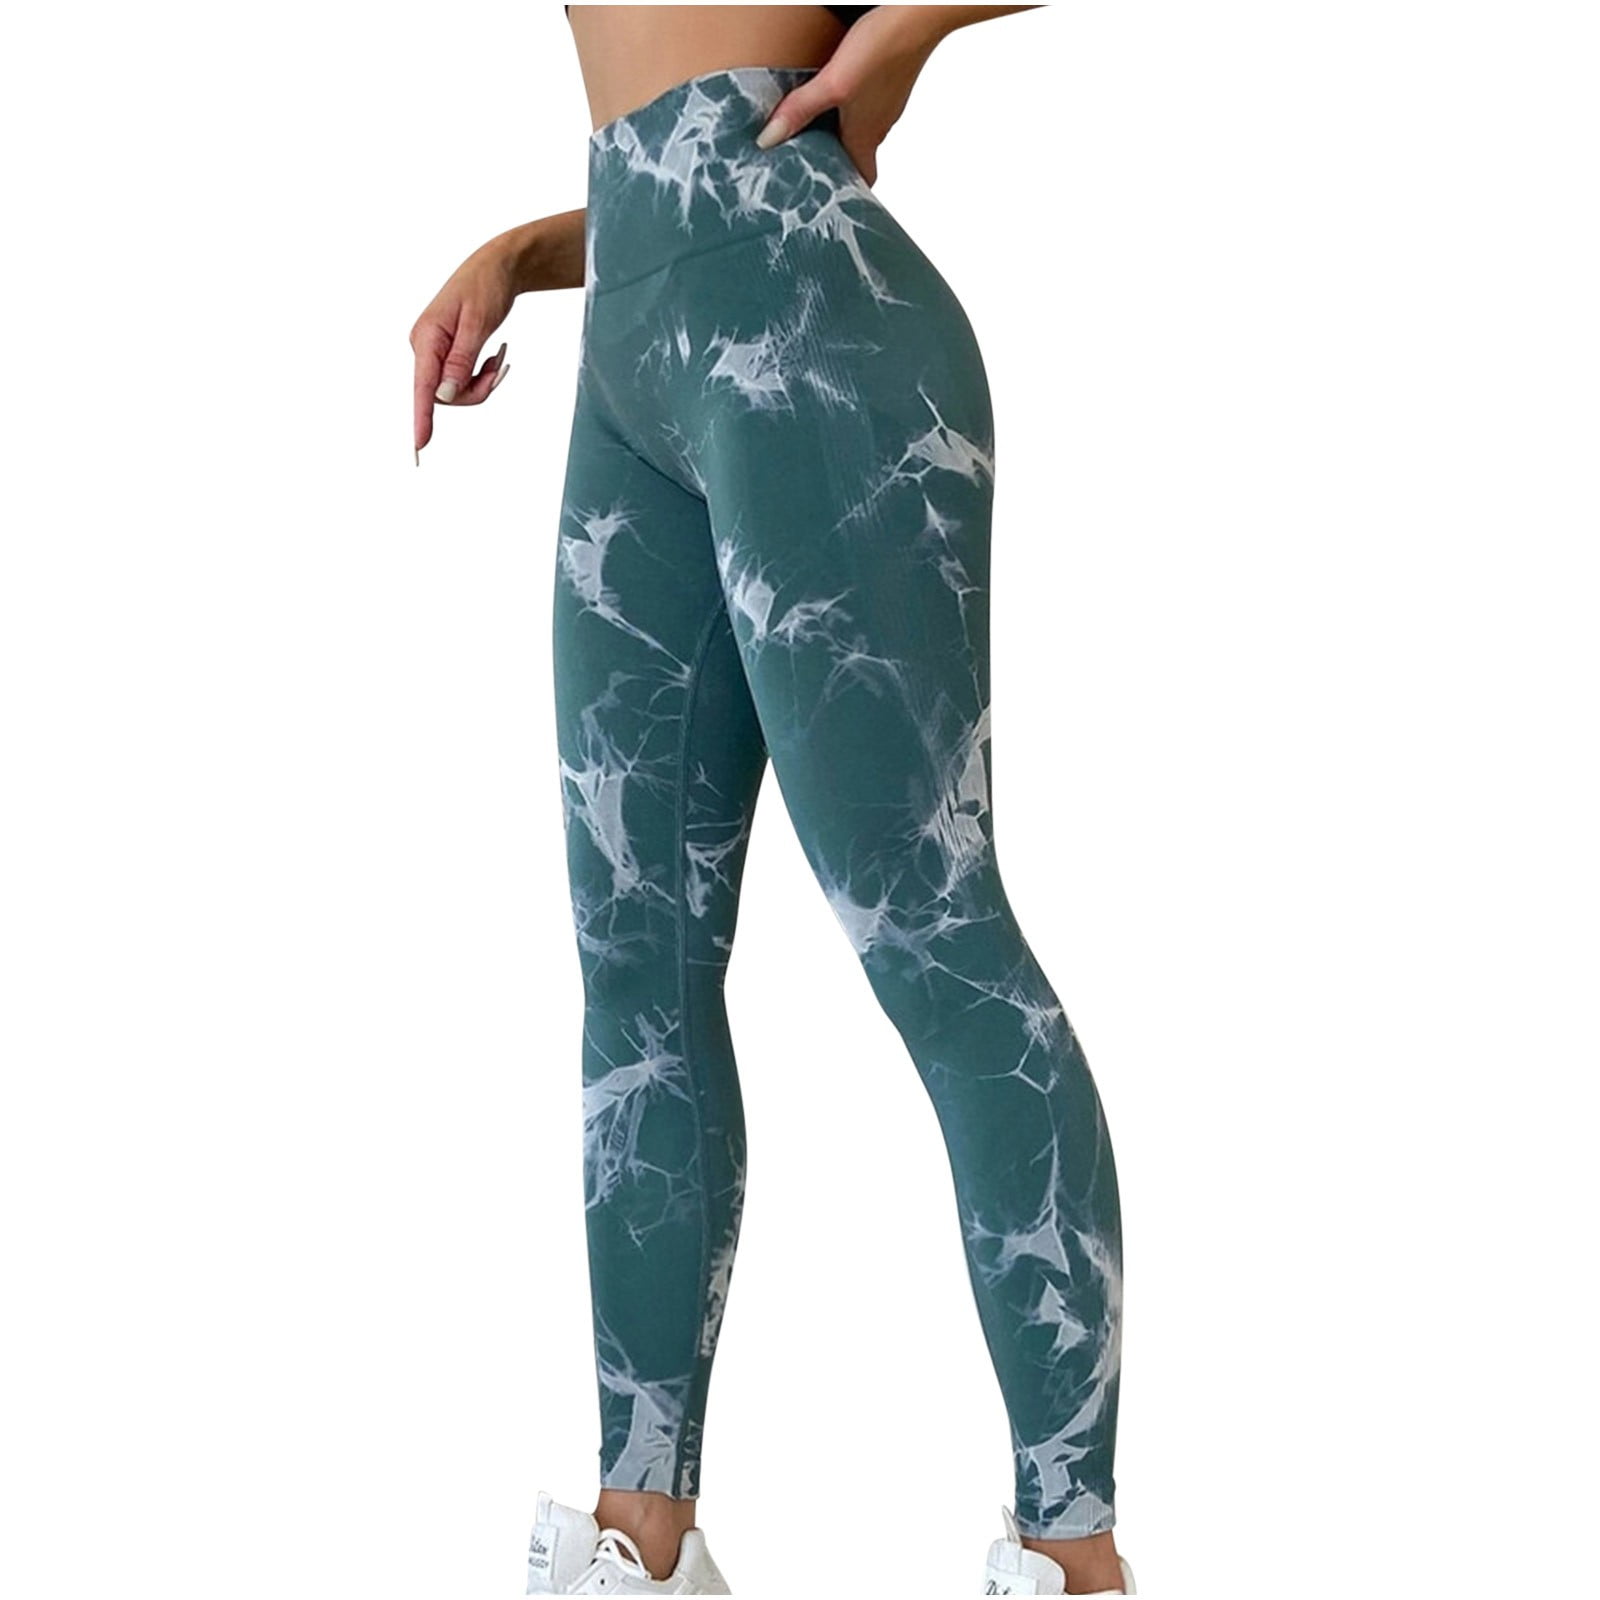 Zodggu Deals Casual Sports Yoga Pants for Women Yoga Full